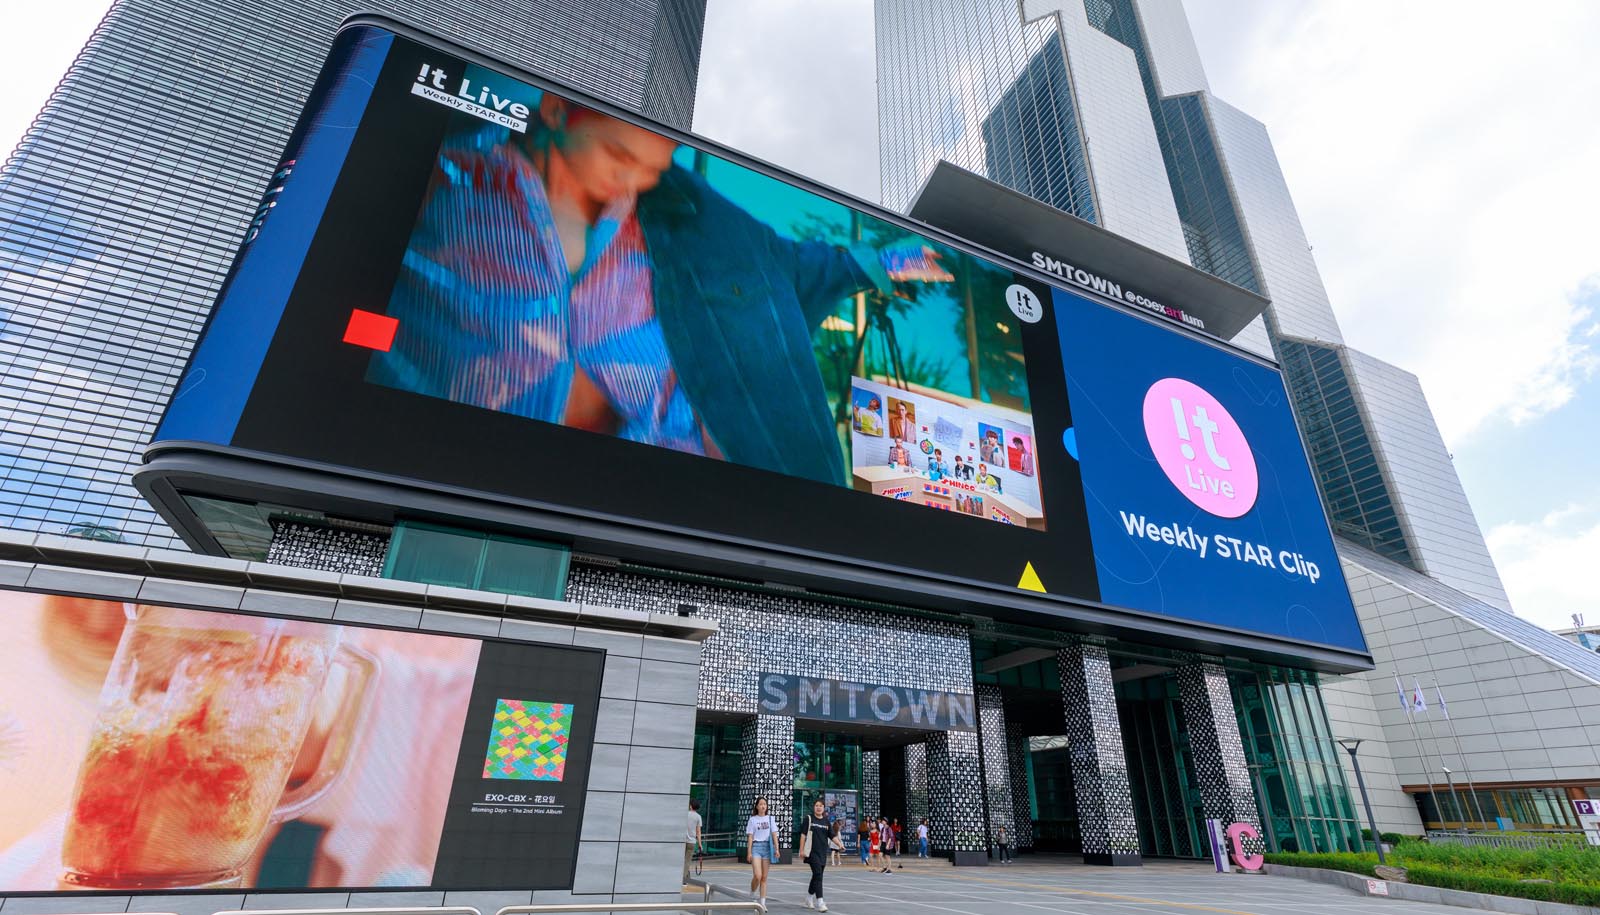 Digital Billboards to Advertise